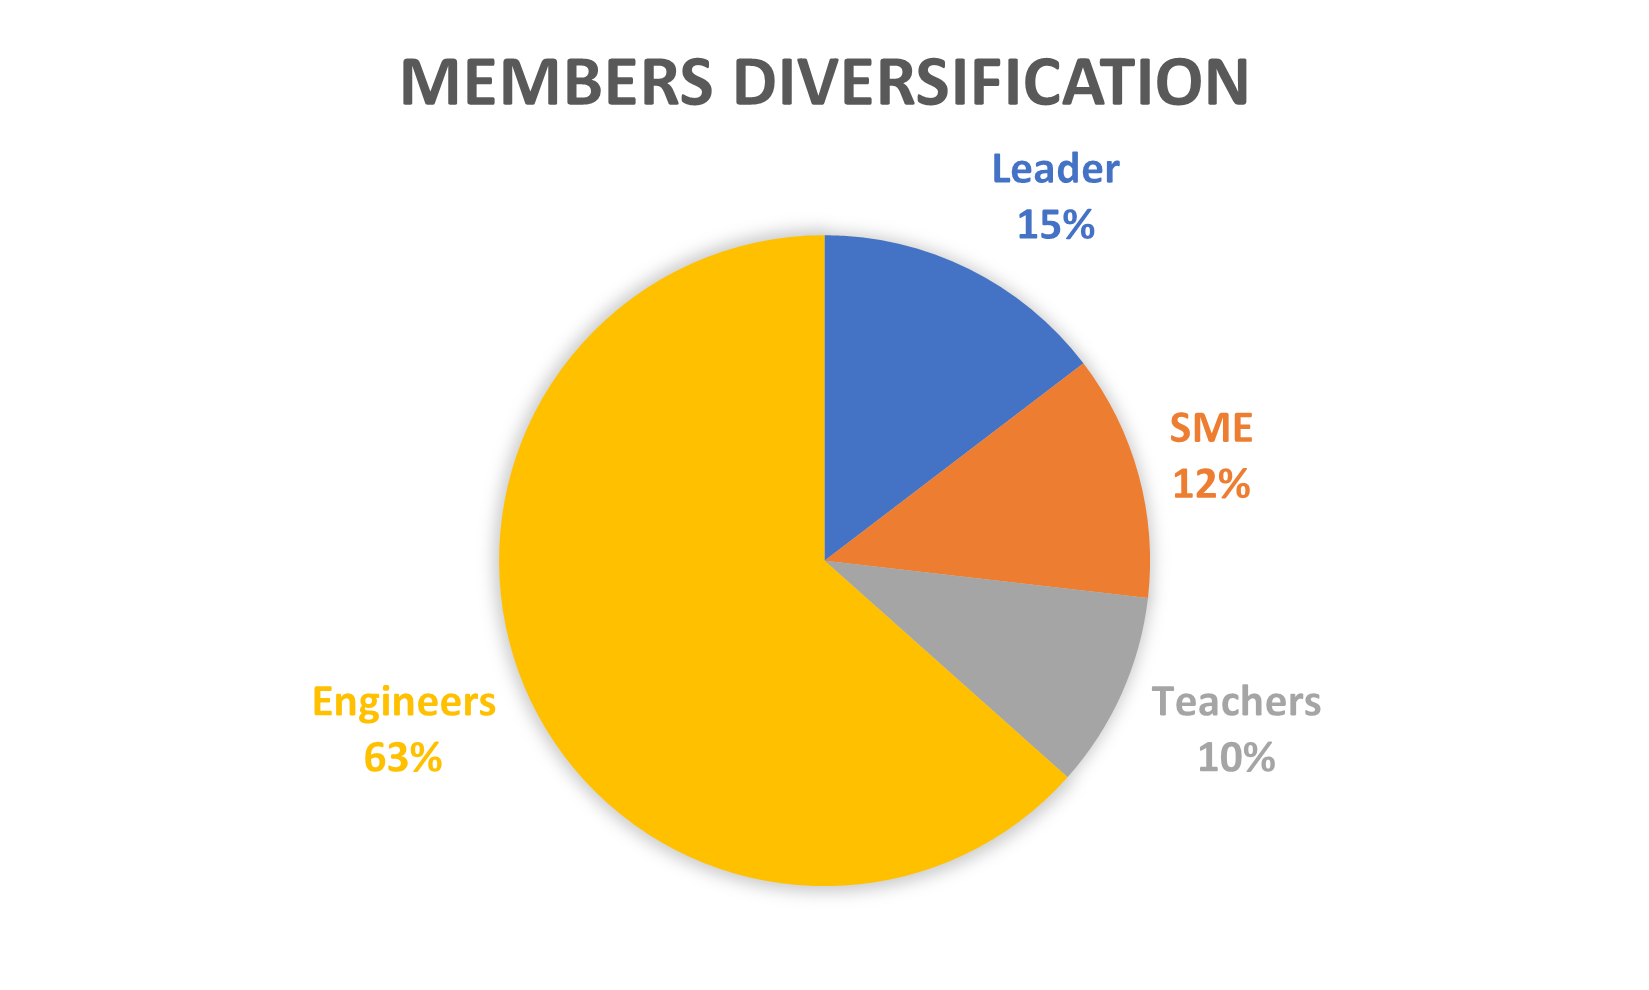 iPIP members diversification